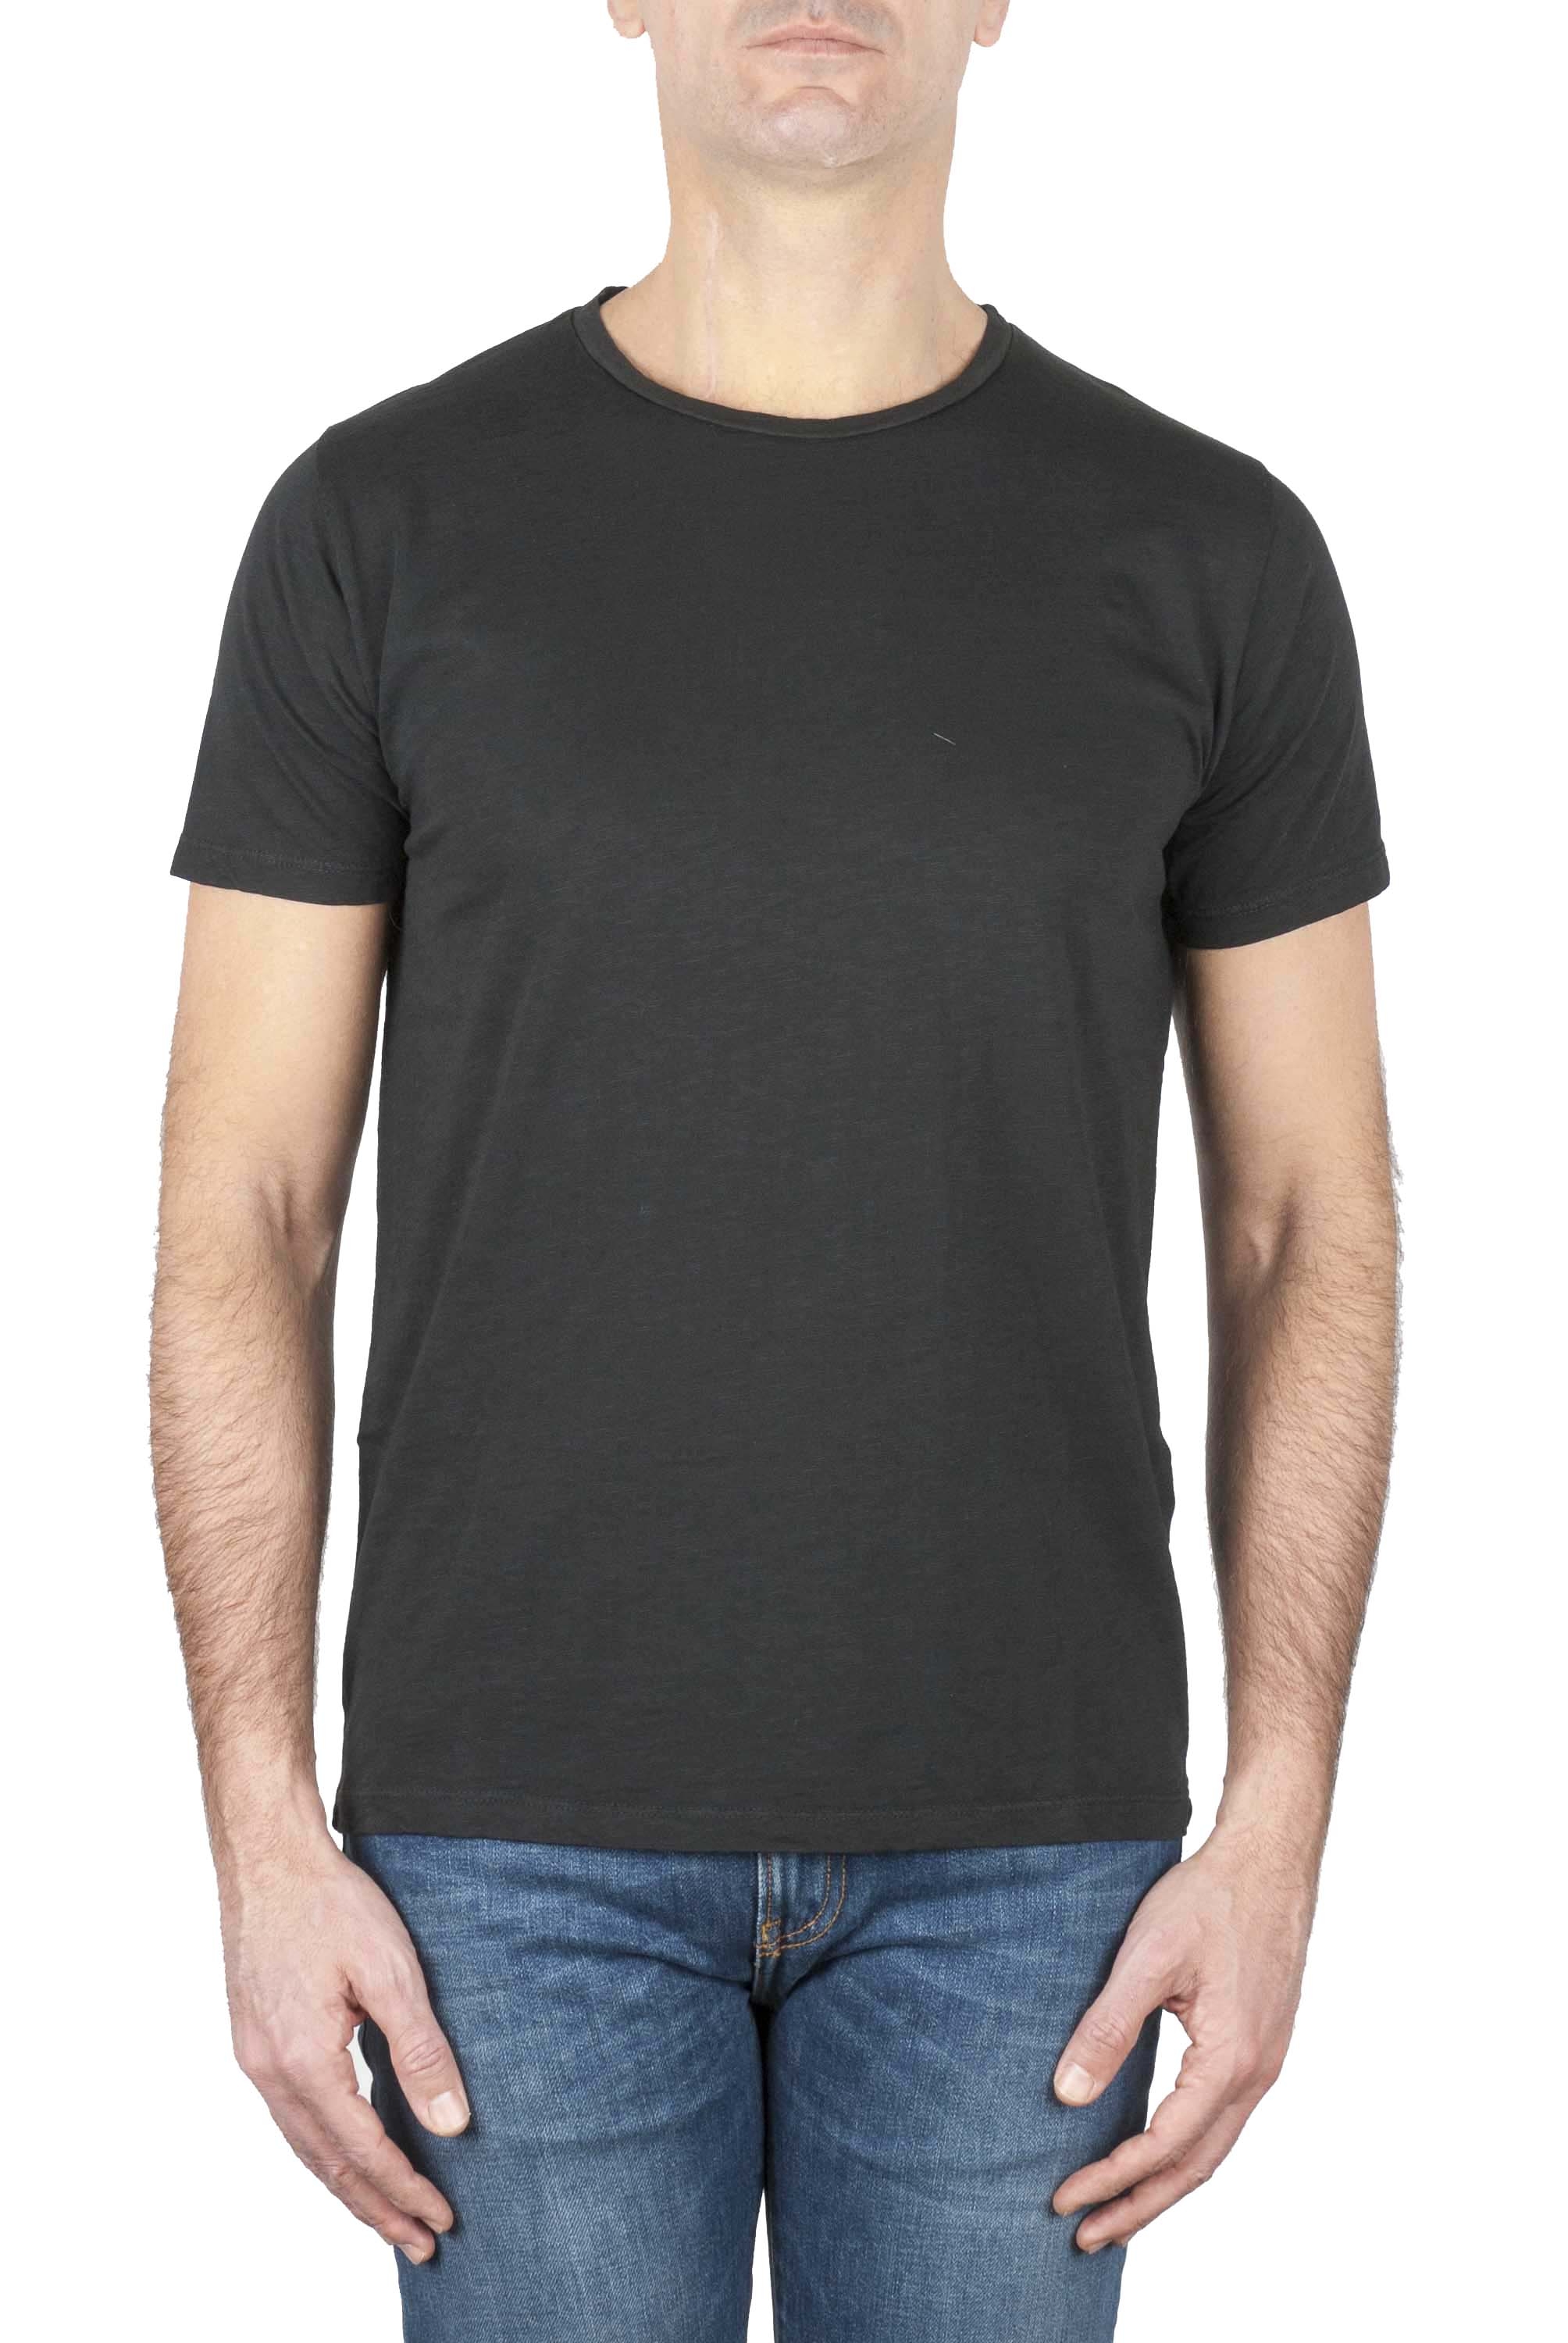 SBU 01644 T-shirt girocollo aperto in cotone fiammato nera 01